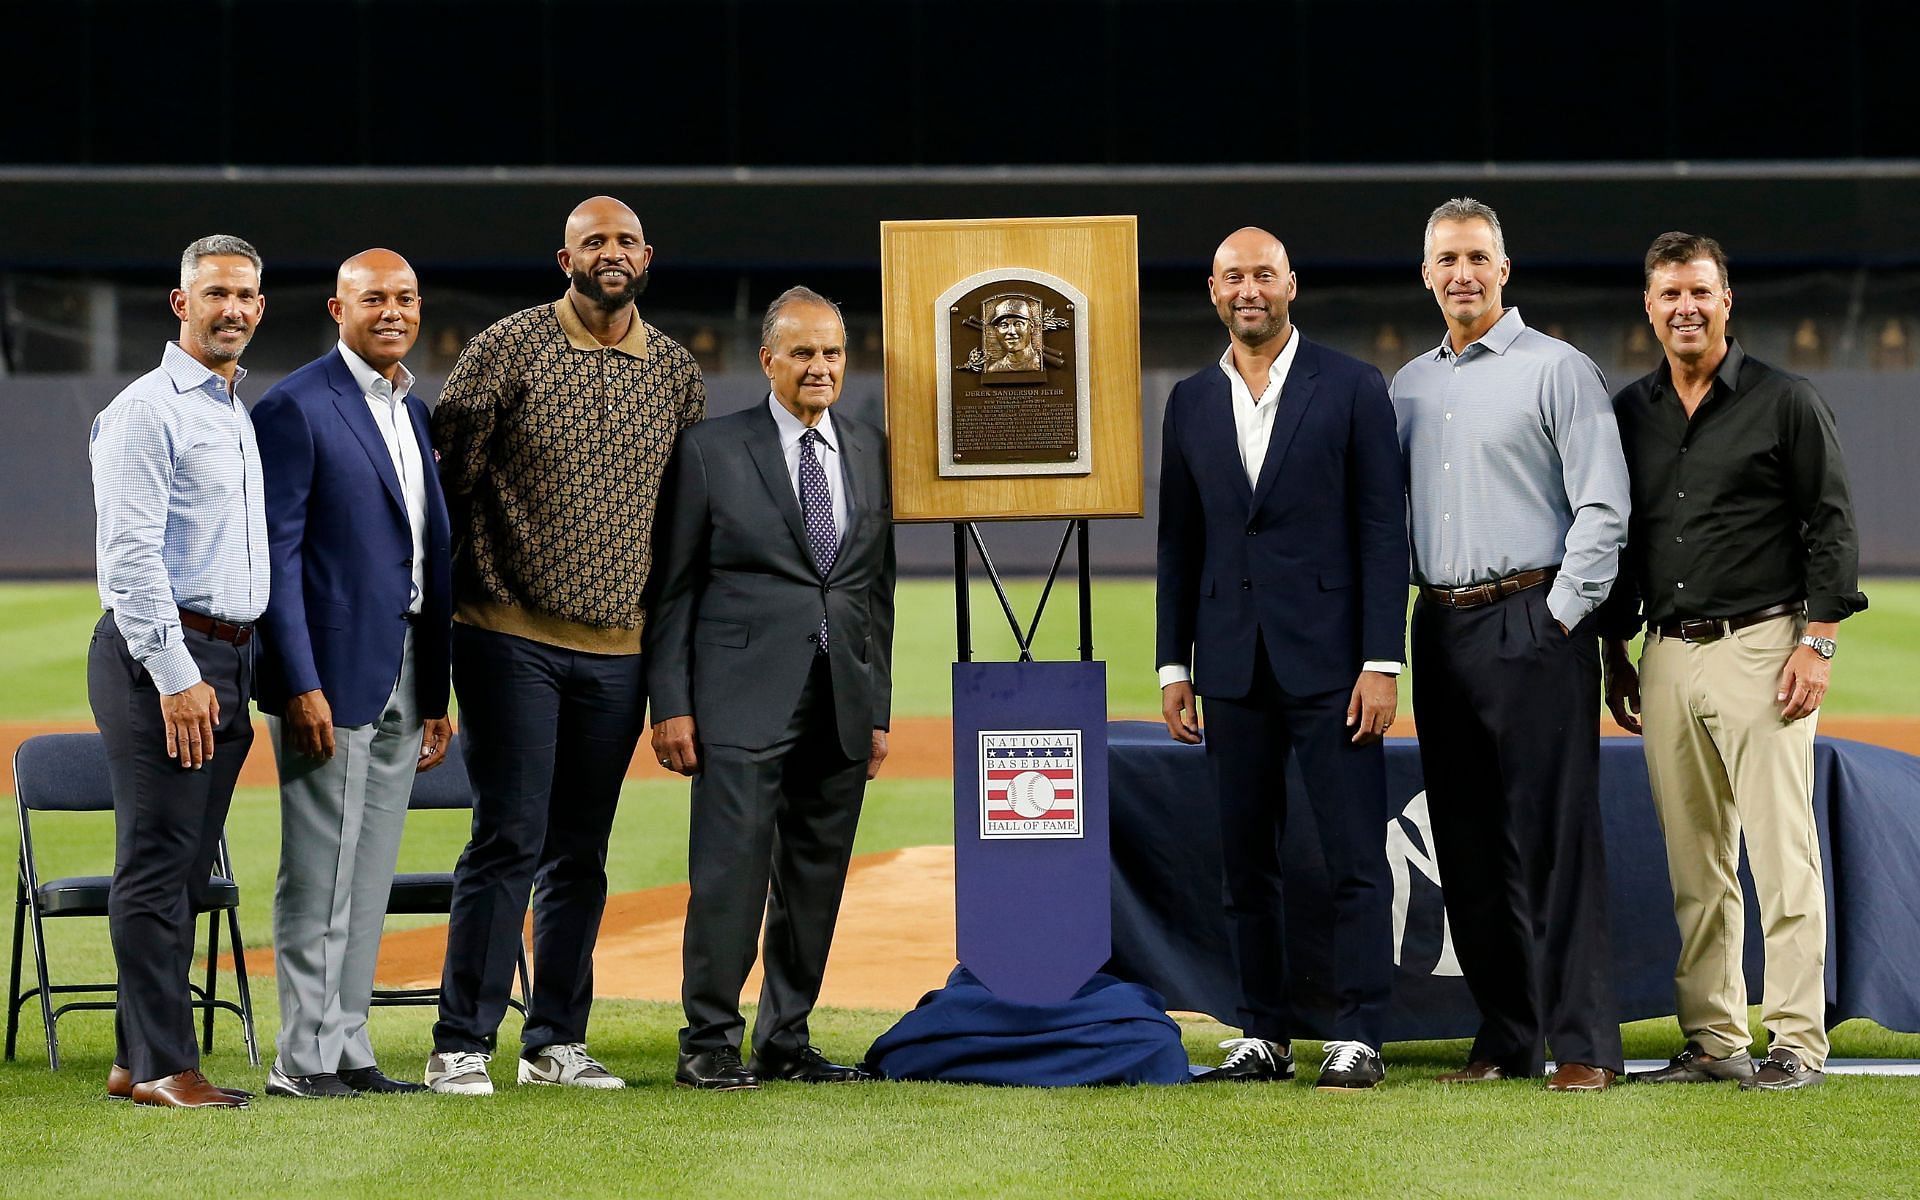 New York Yankees news: Derek Jeter leads Baseball Hall of Fame class